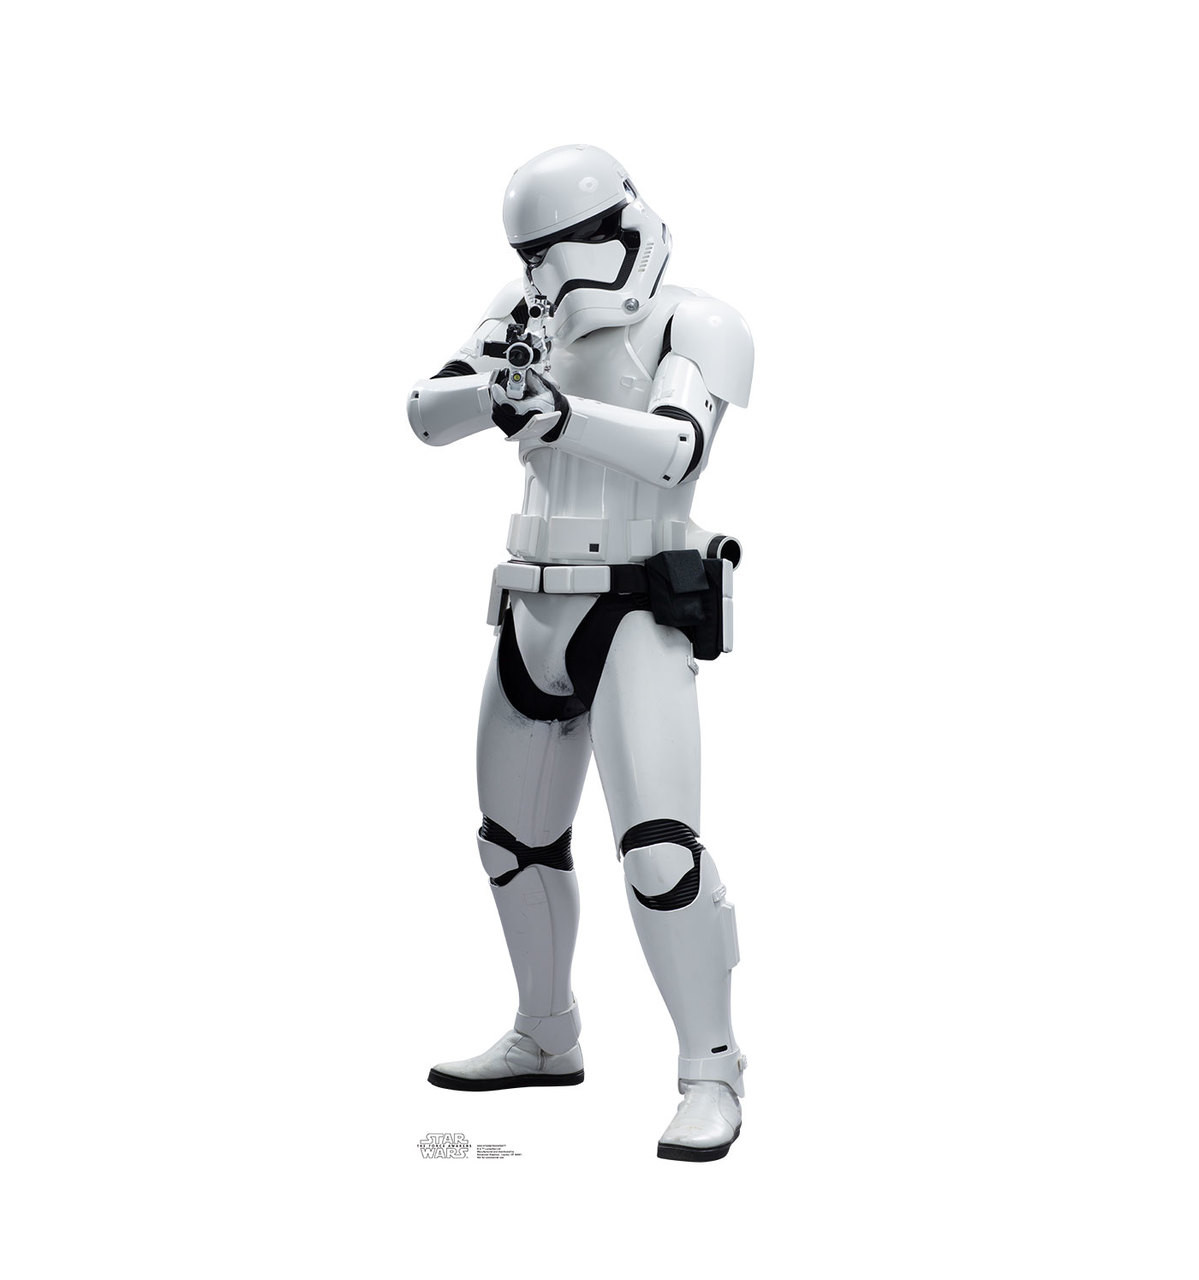 Life-size Stormtrooper Star Wars Cardboard Standup